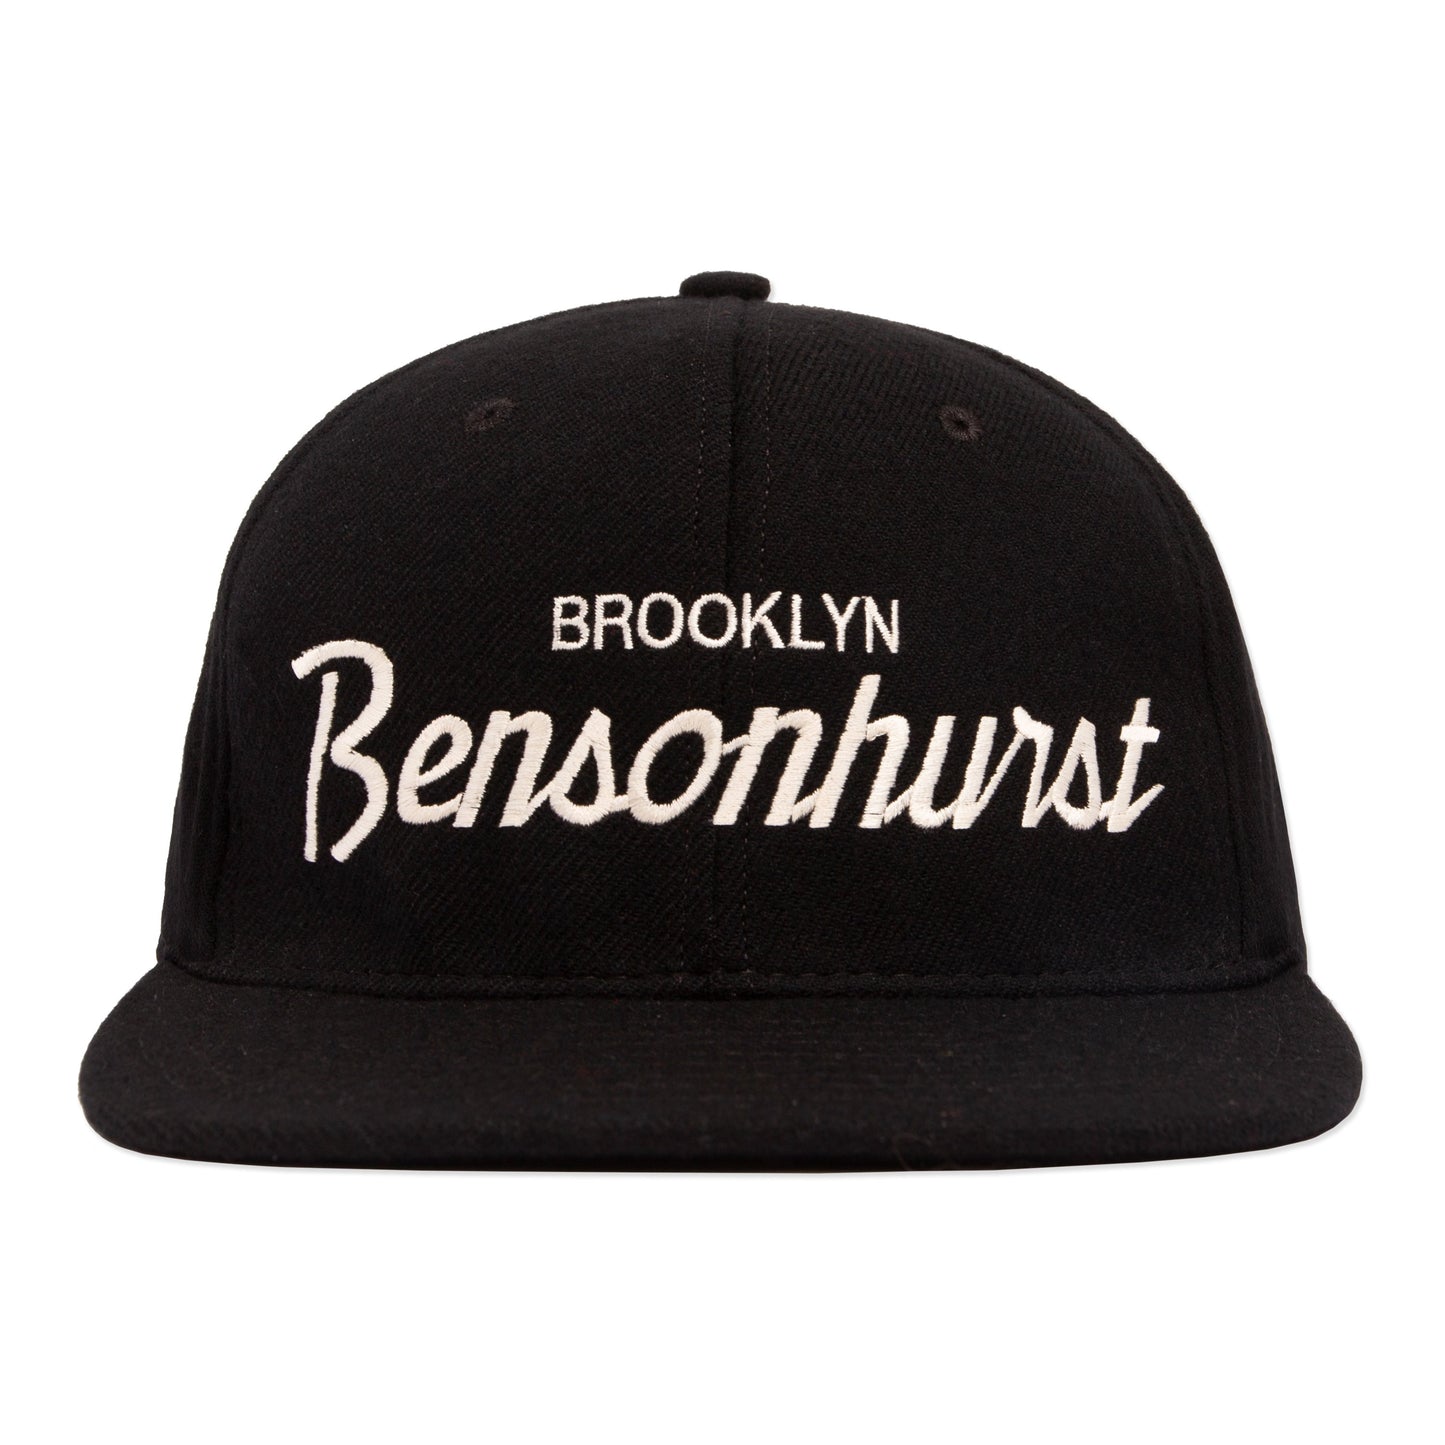 Bensonhurst Snapback Hat